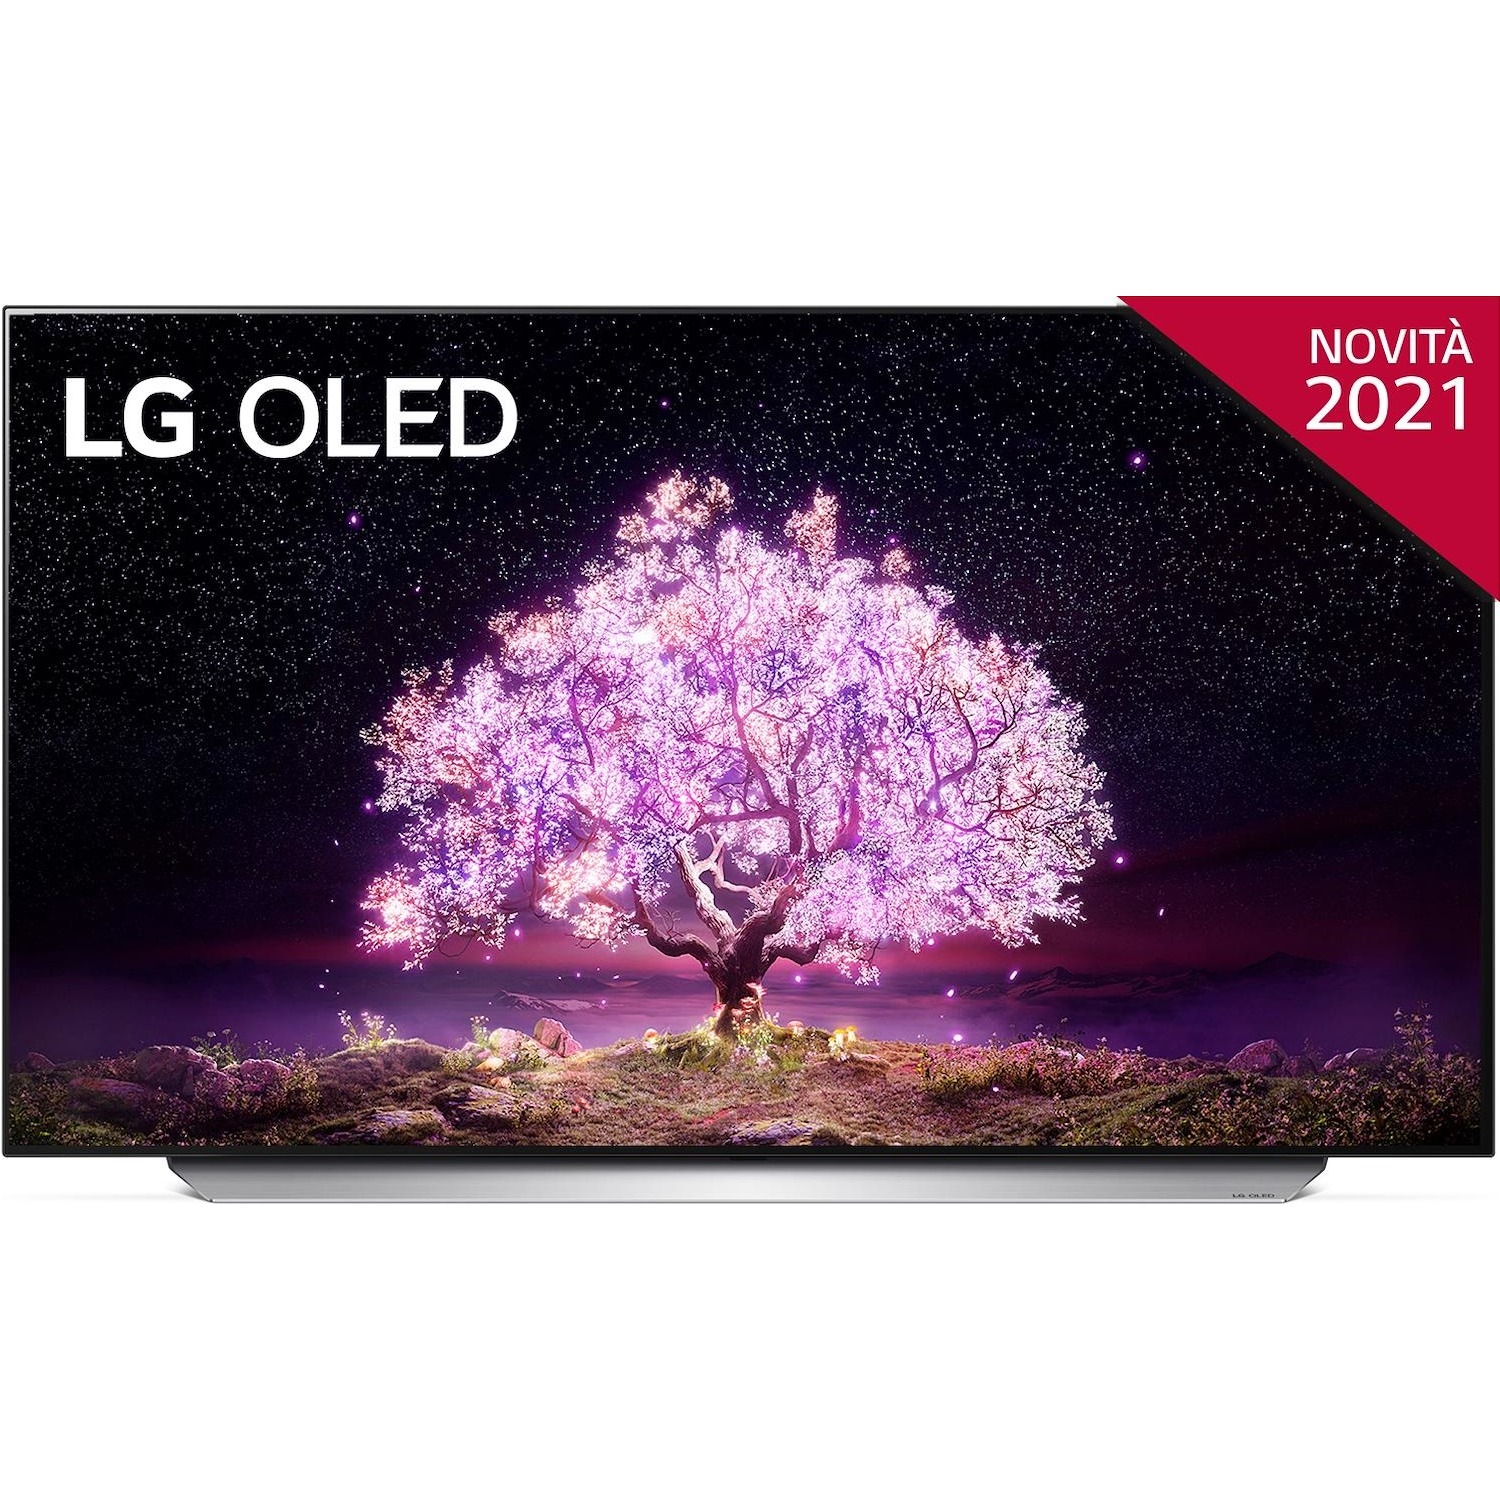 Immagine per TV OLED LG OLED48C15 Calibrato 4K e FULL HD da DIMOStore